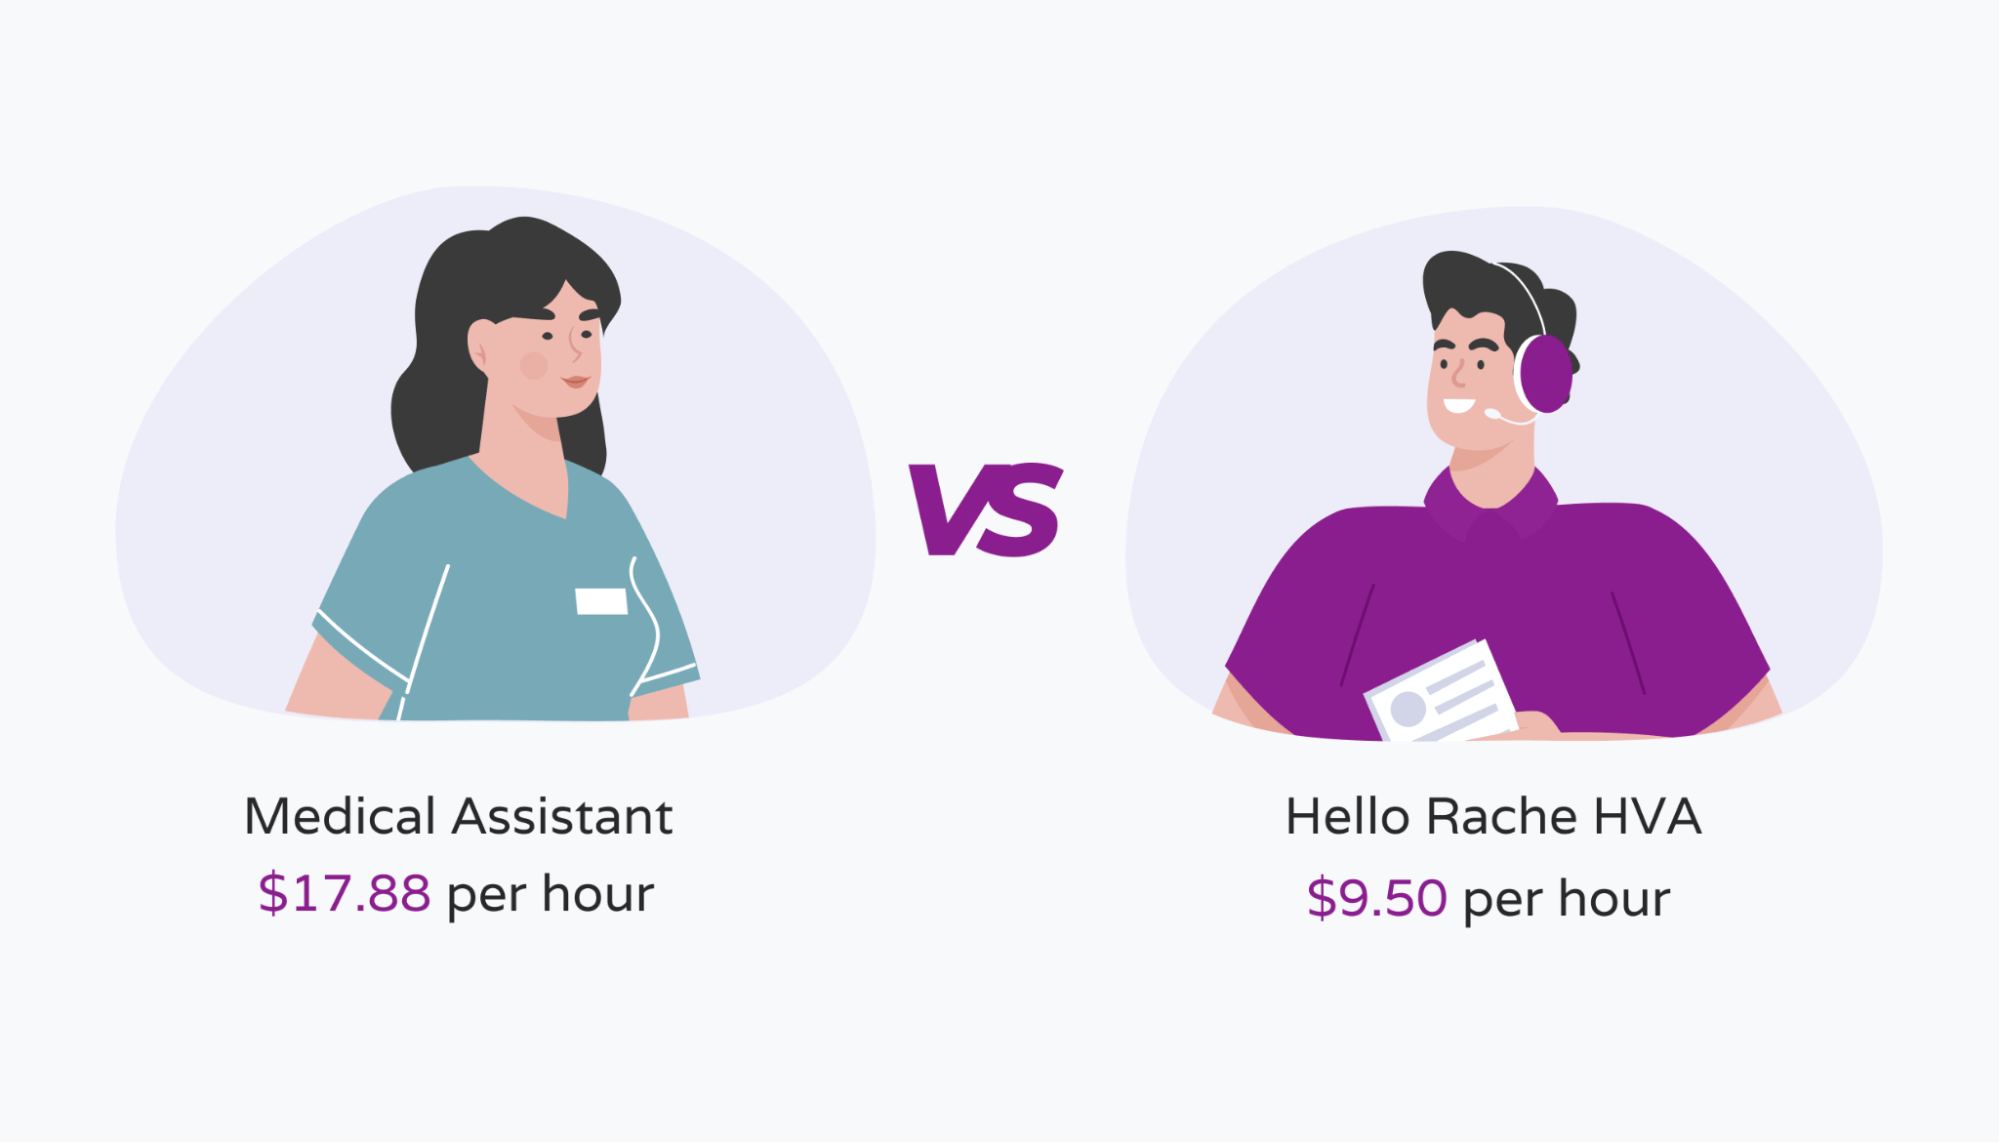 Price comparison of medical assistant vs virtual assistant